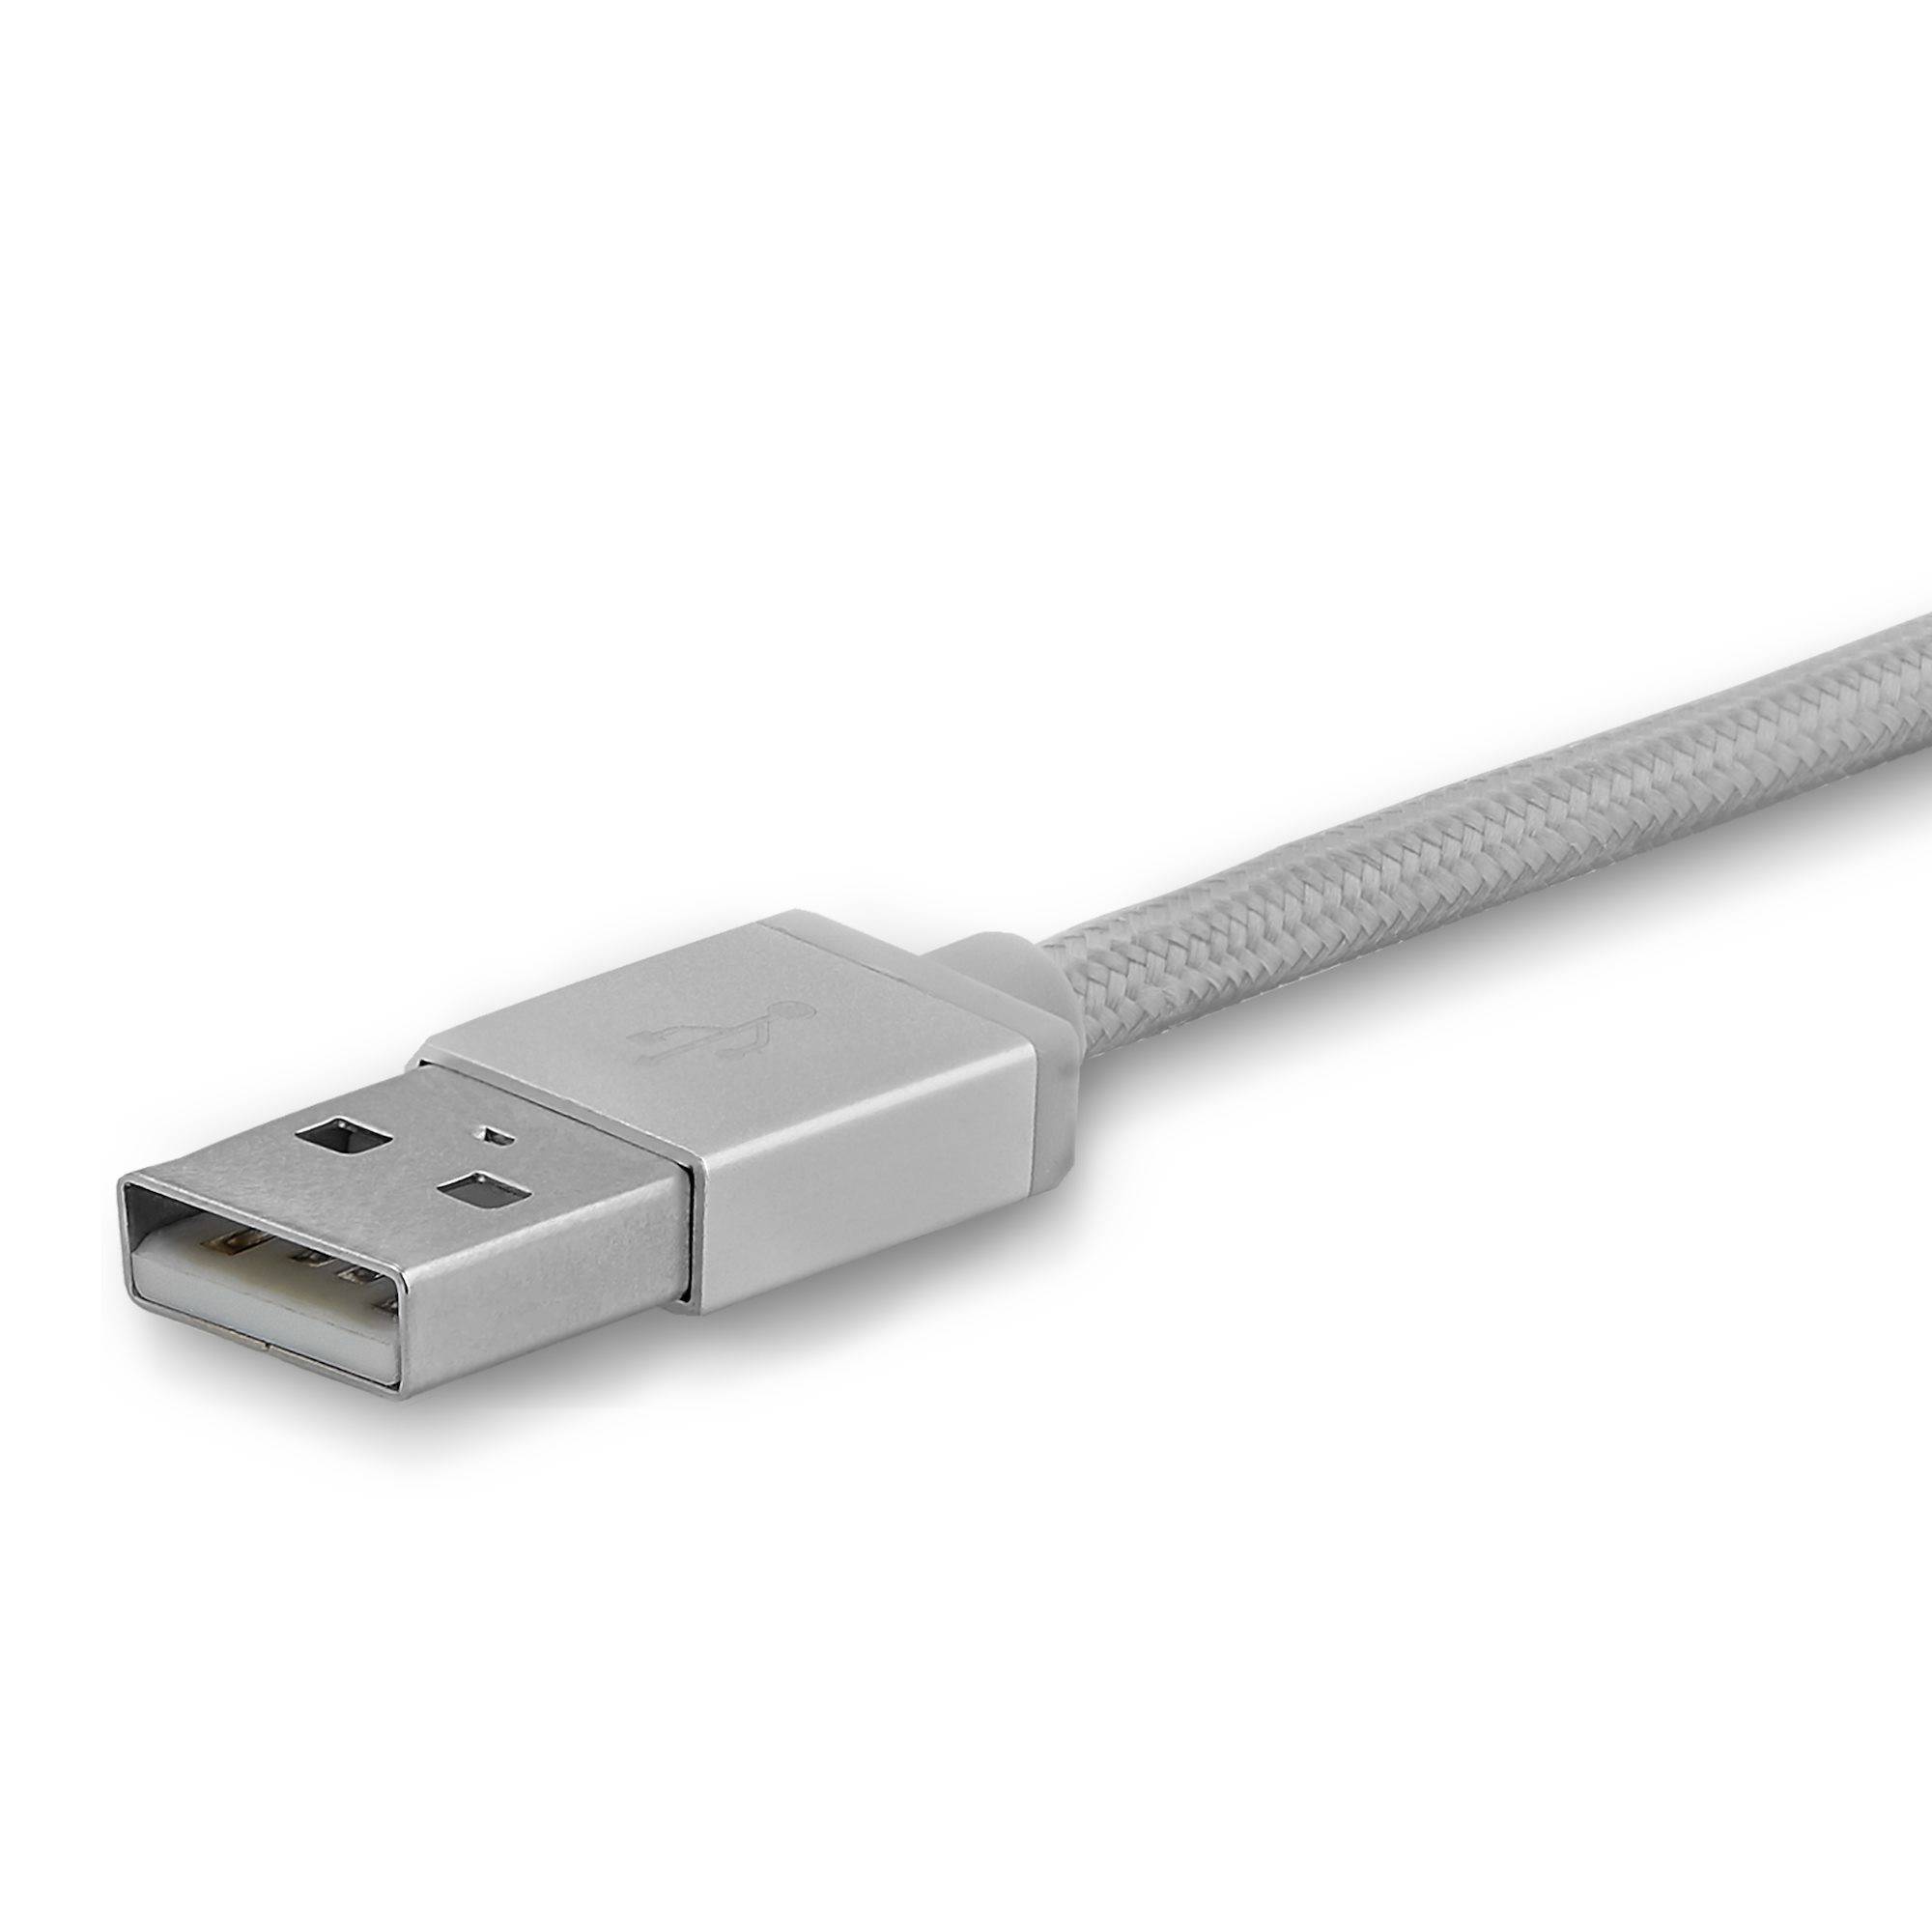 Rca Informatique - image du produit : 2M USB MULTI CHARGING CABLE LIGHTNING USB-C MICRO-USB